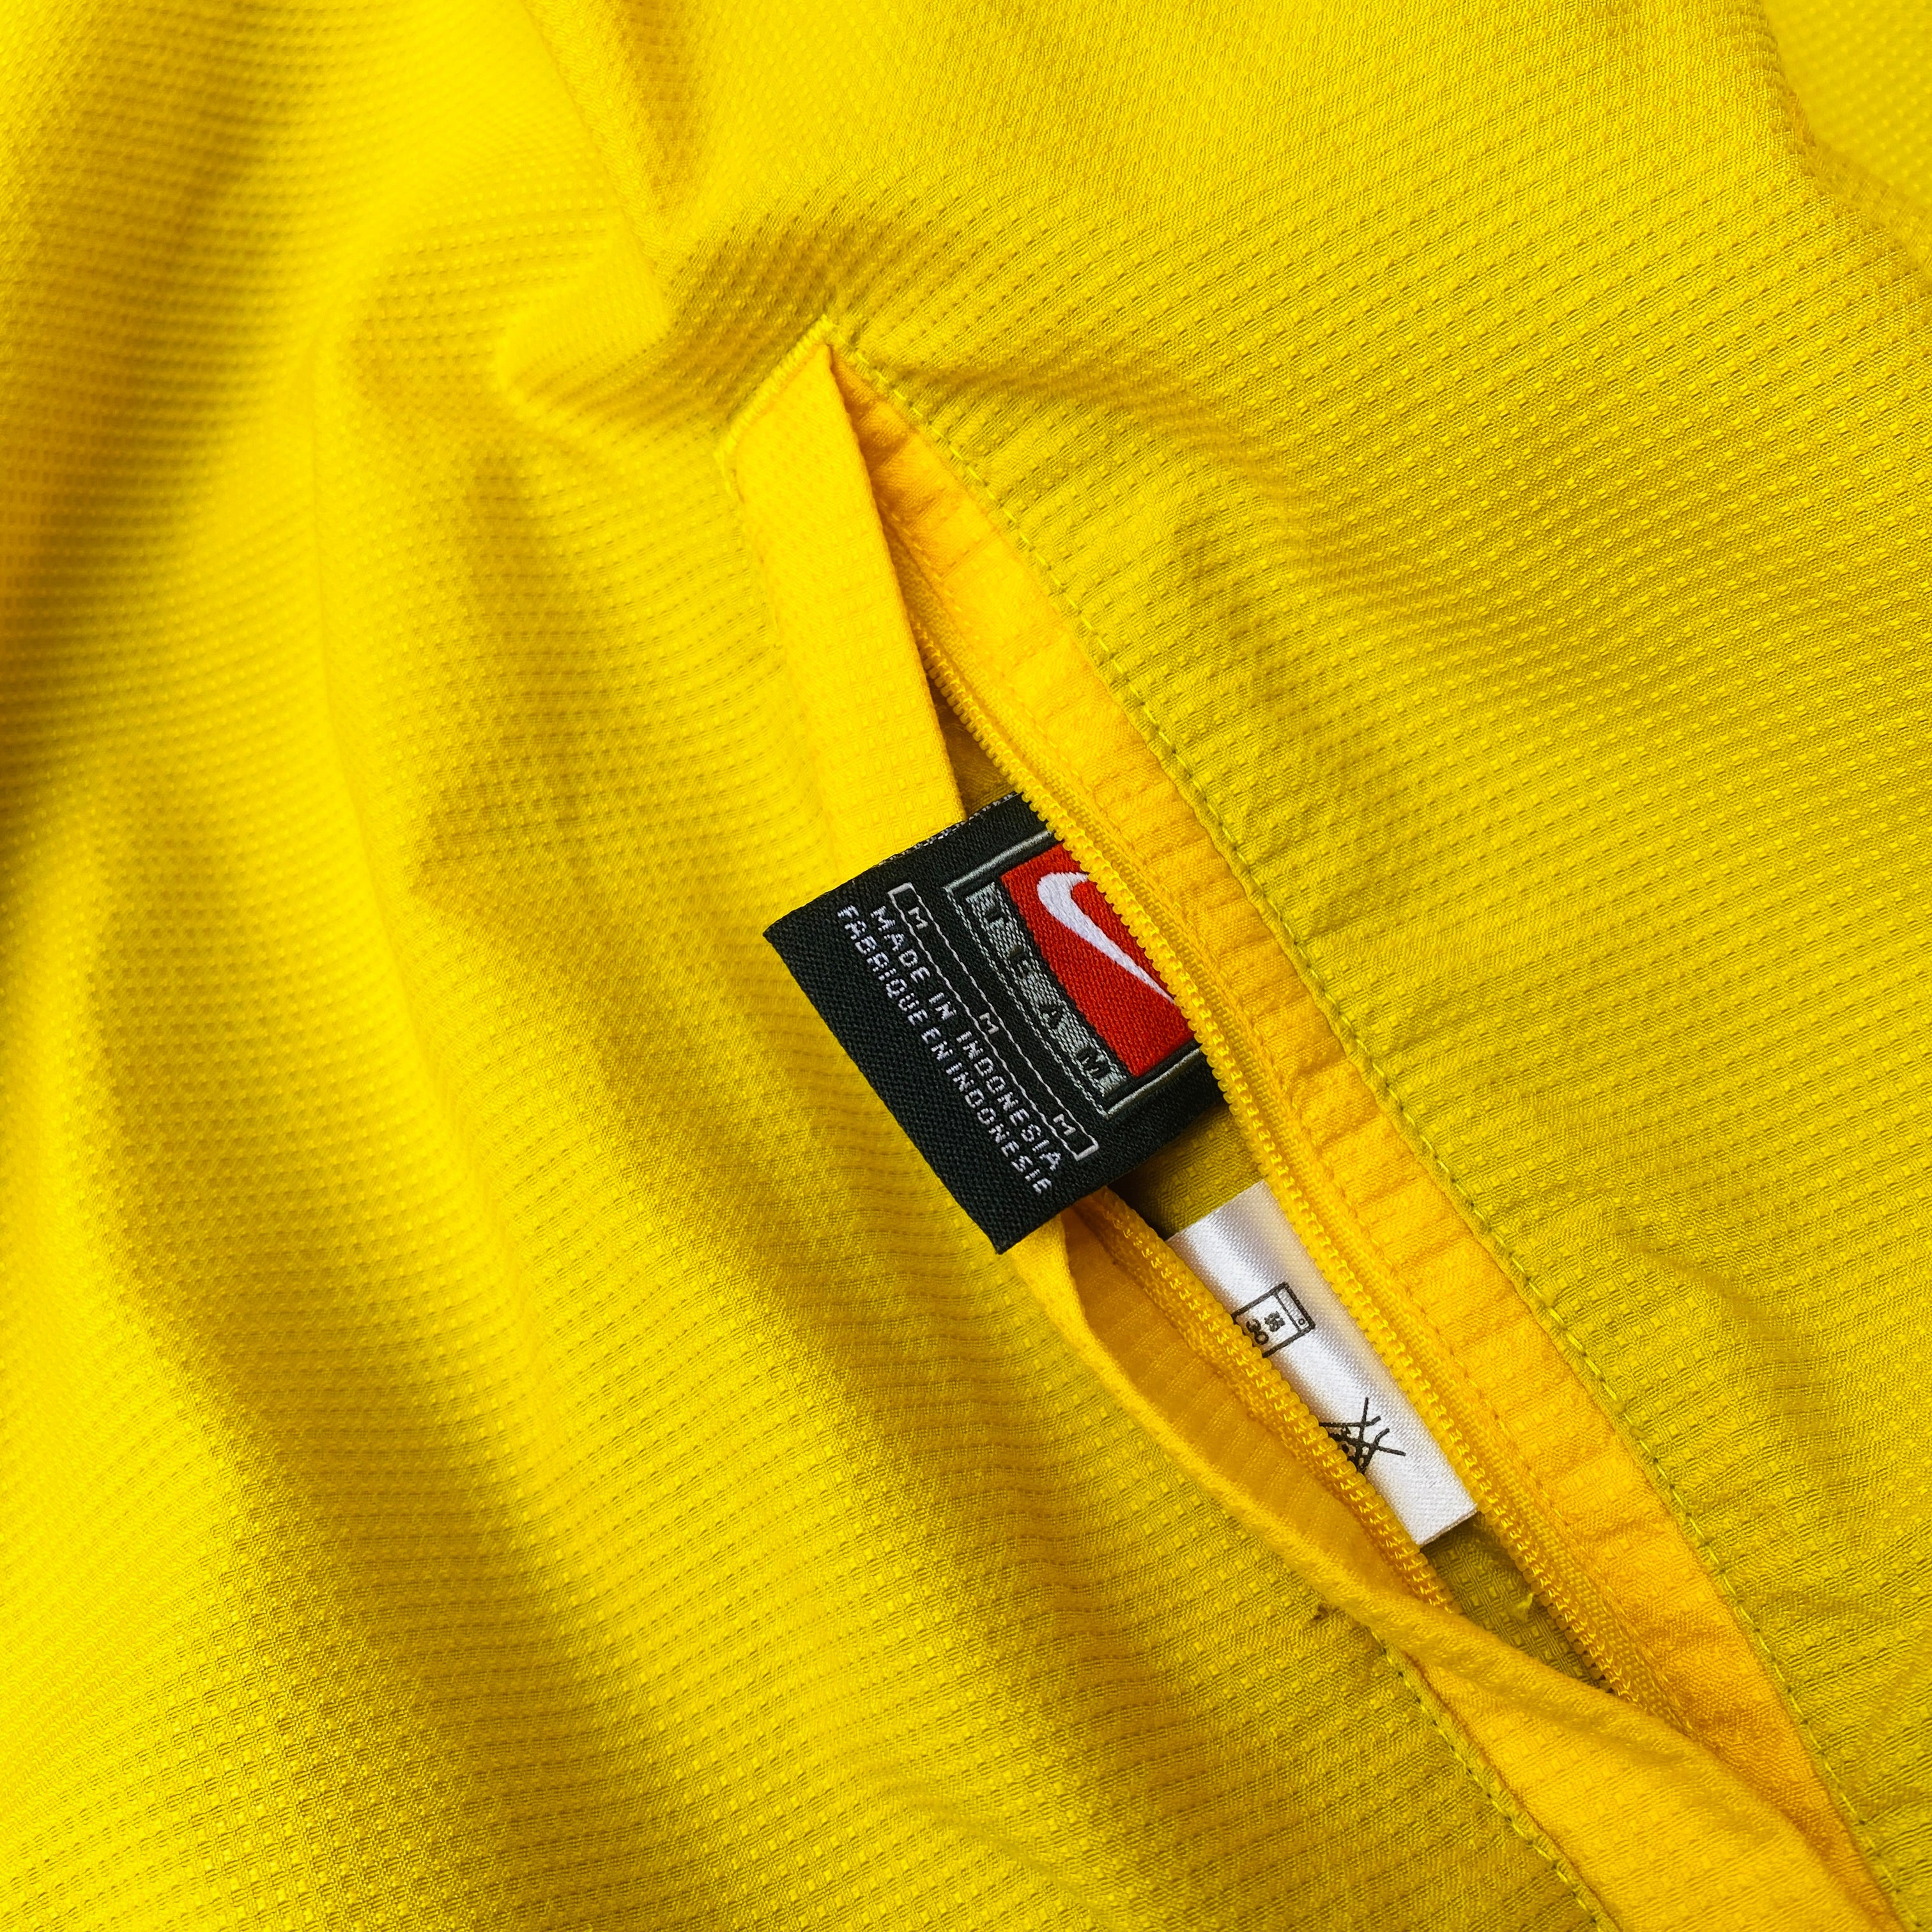 90s Nike Brazil Reversible Windbreaker Jacket Yellow Blue Medium